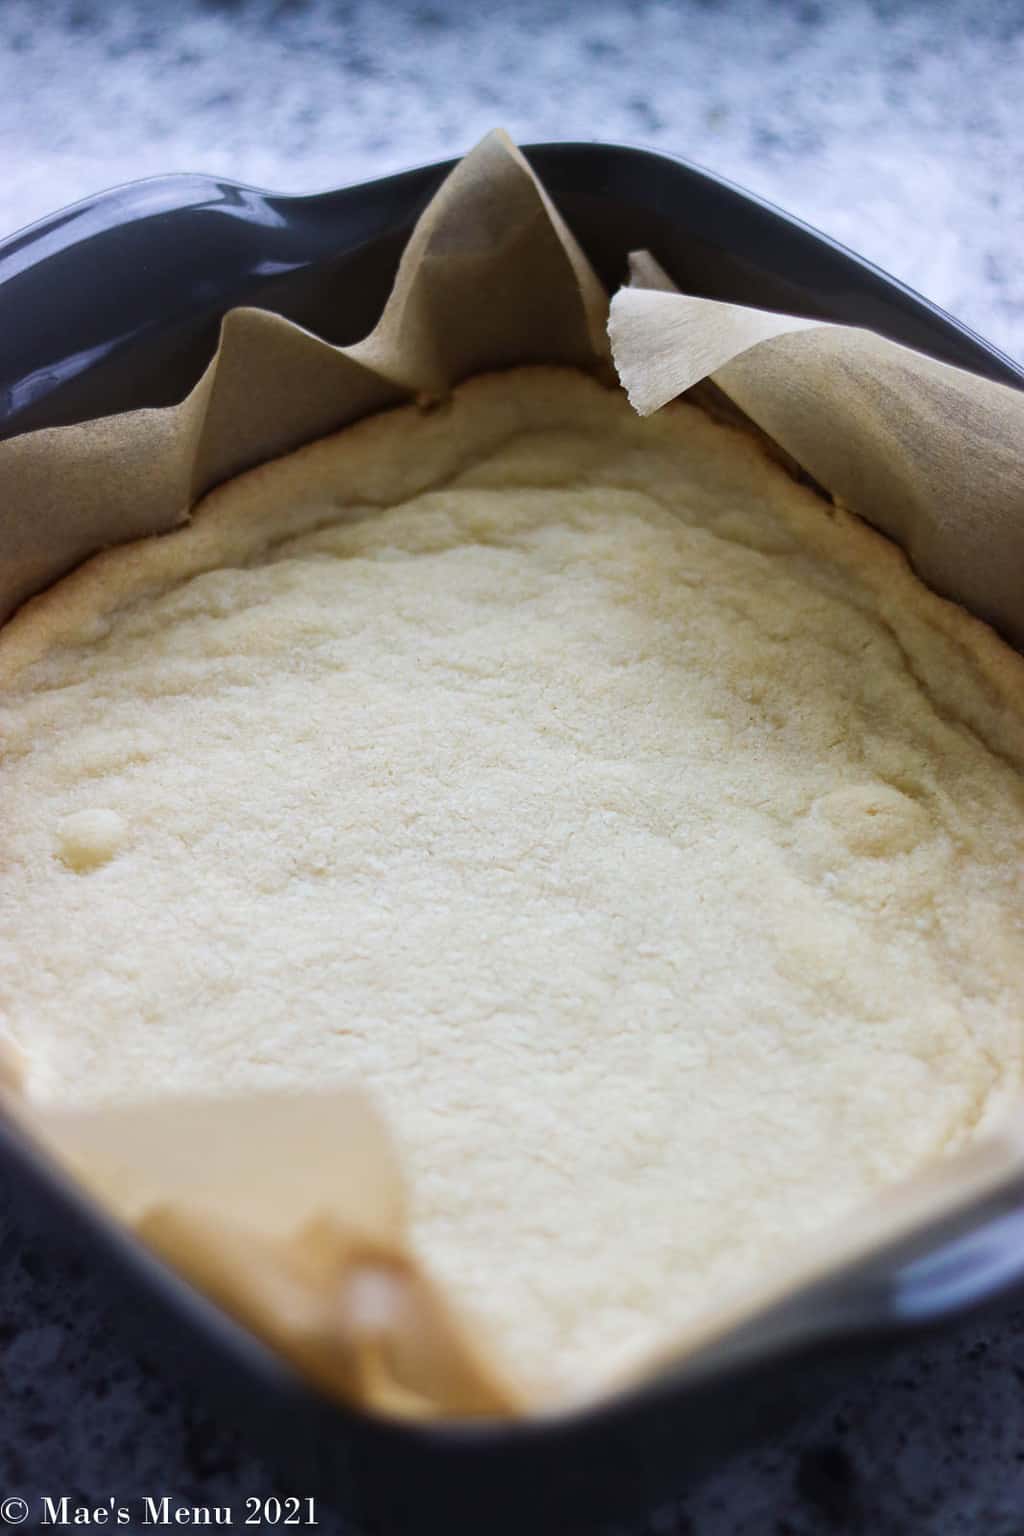 A baked shortbread crust